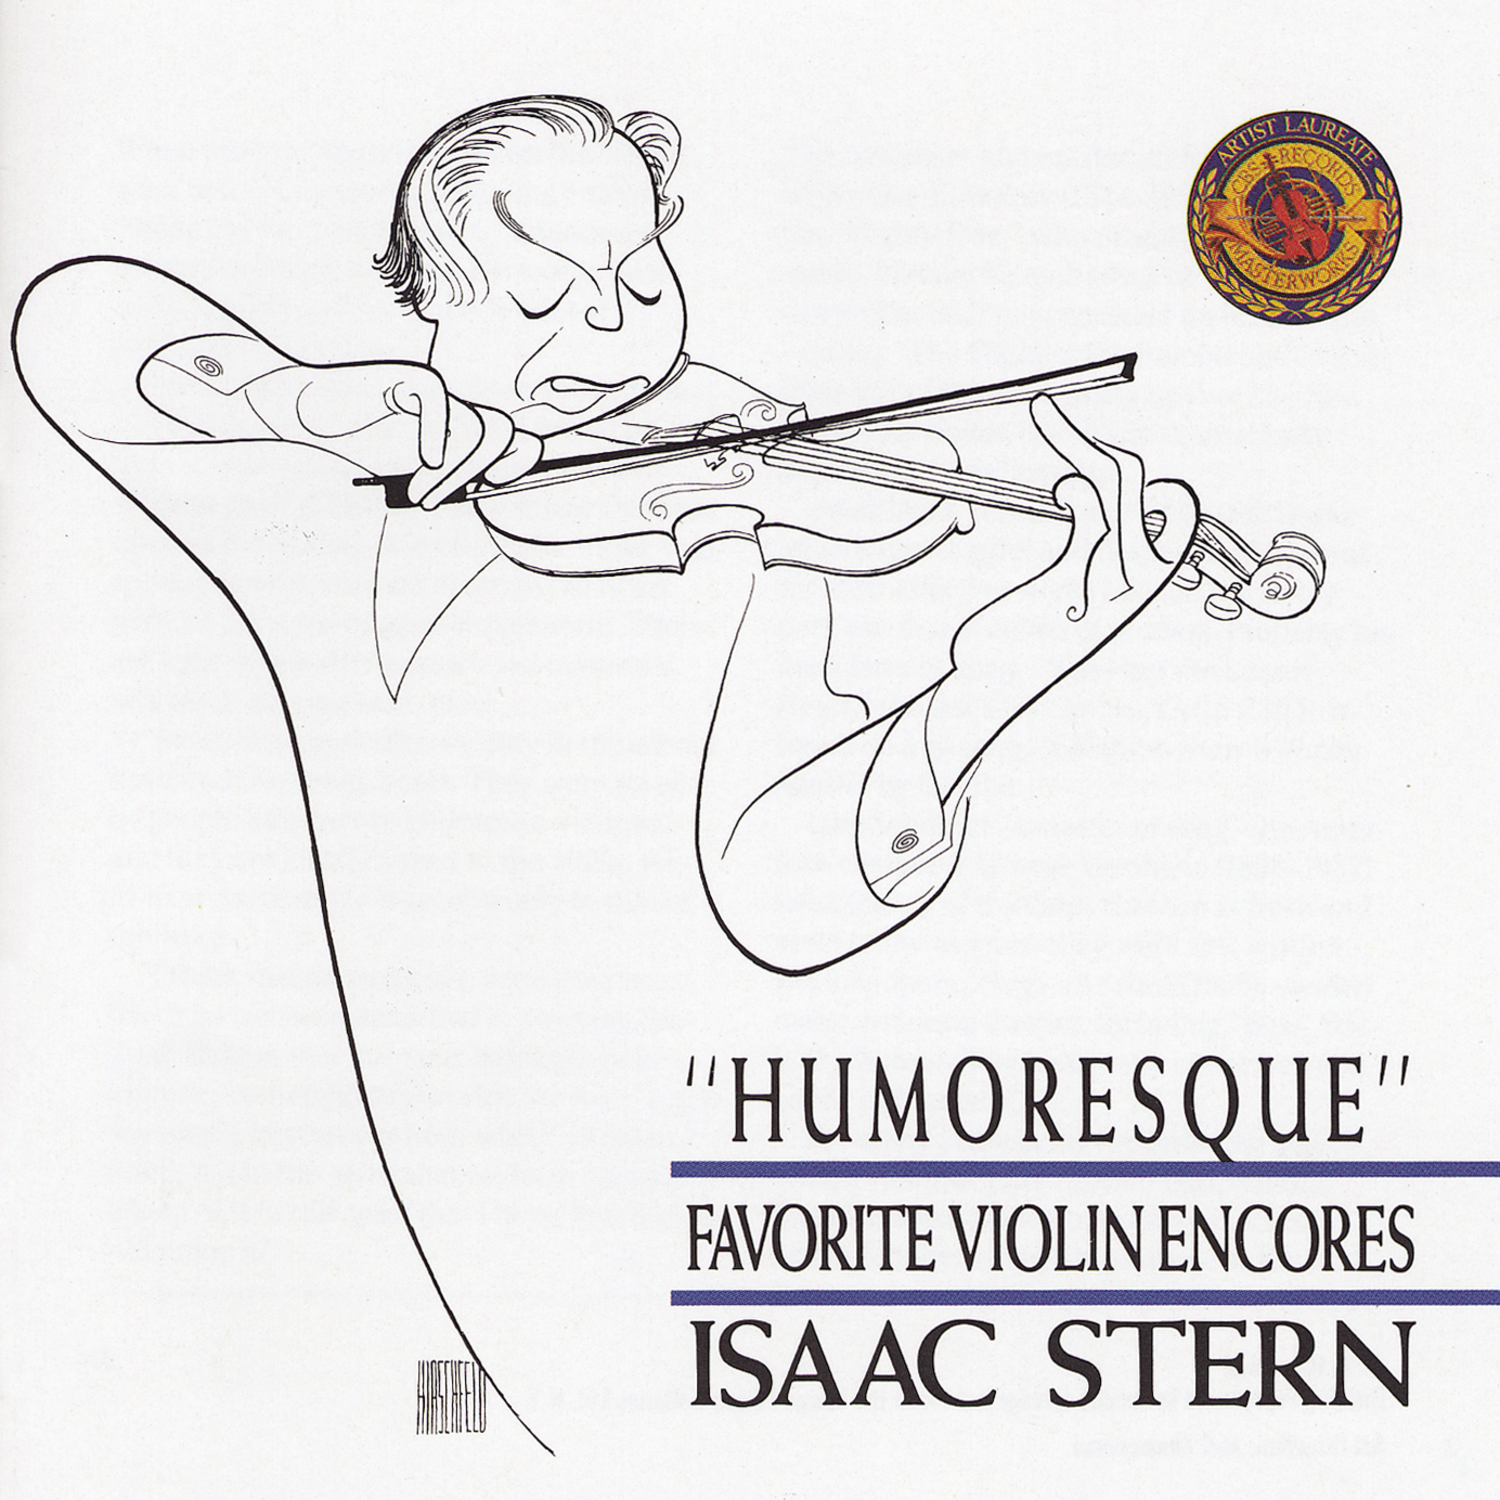 Isaac Stern - Isaac Stern: "Humoresque" - Favorite Violin Encores